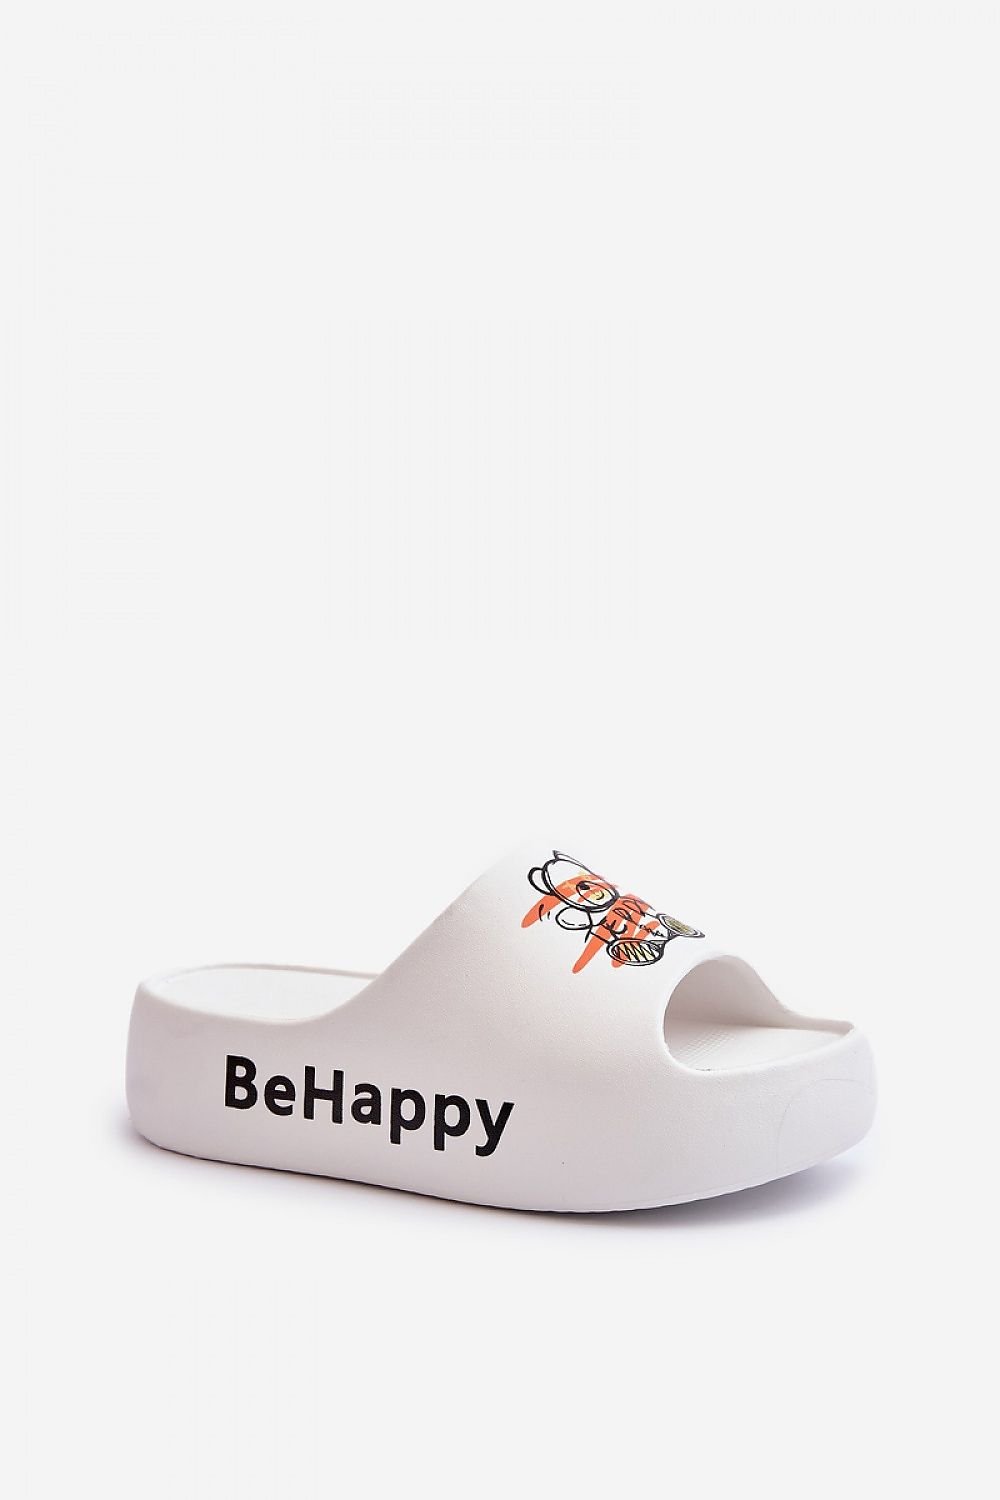 TEEK - Be Happy Bear Platform Slides SHOES TEEK MH white 6 